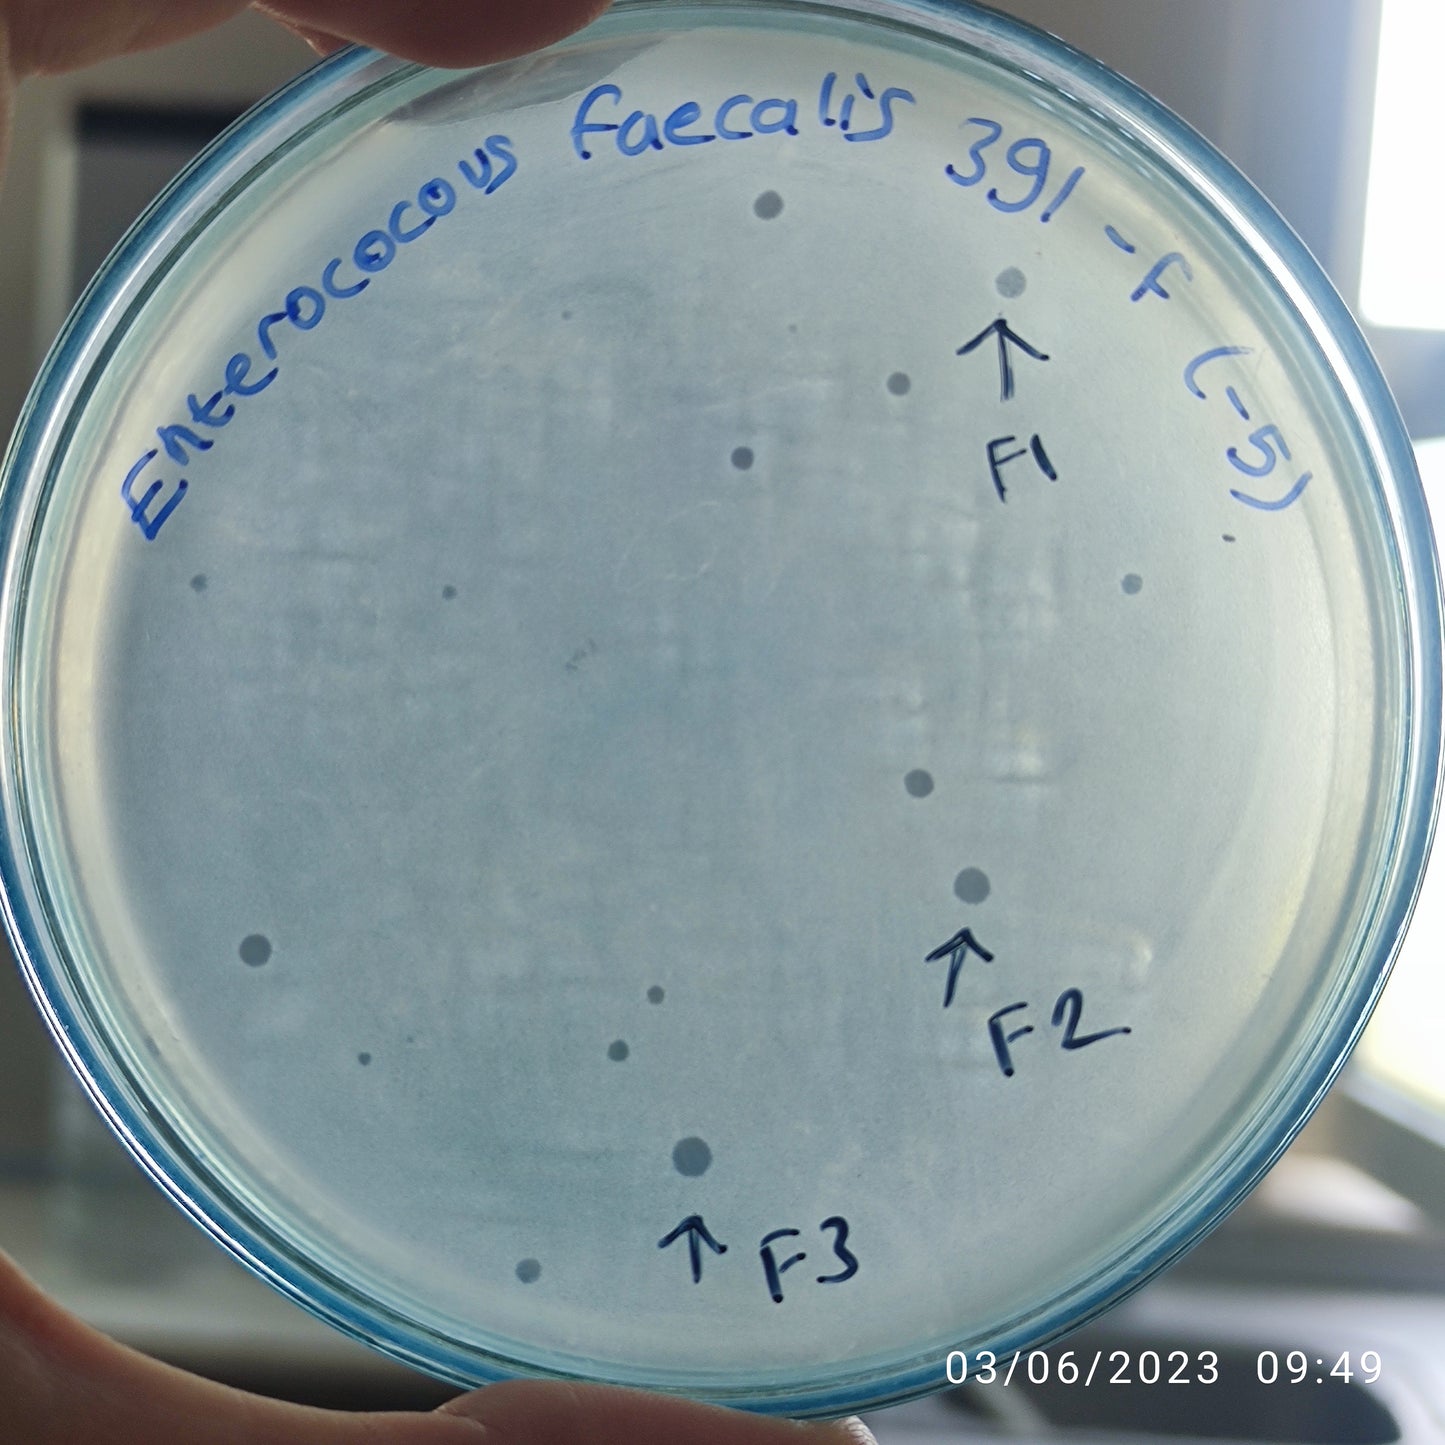 Enterococcus faecalis bacteriophage 110391F